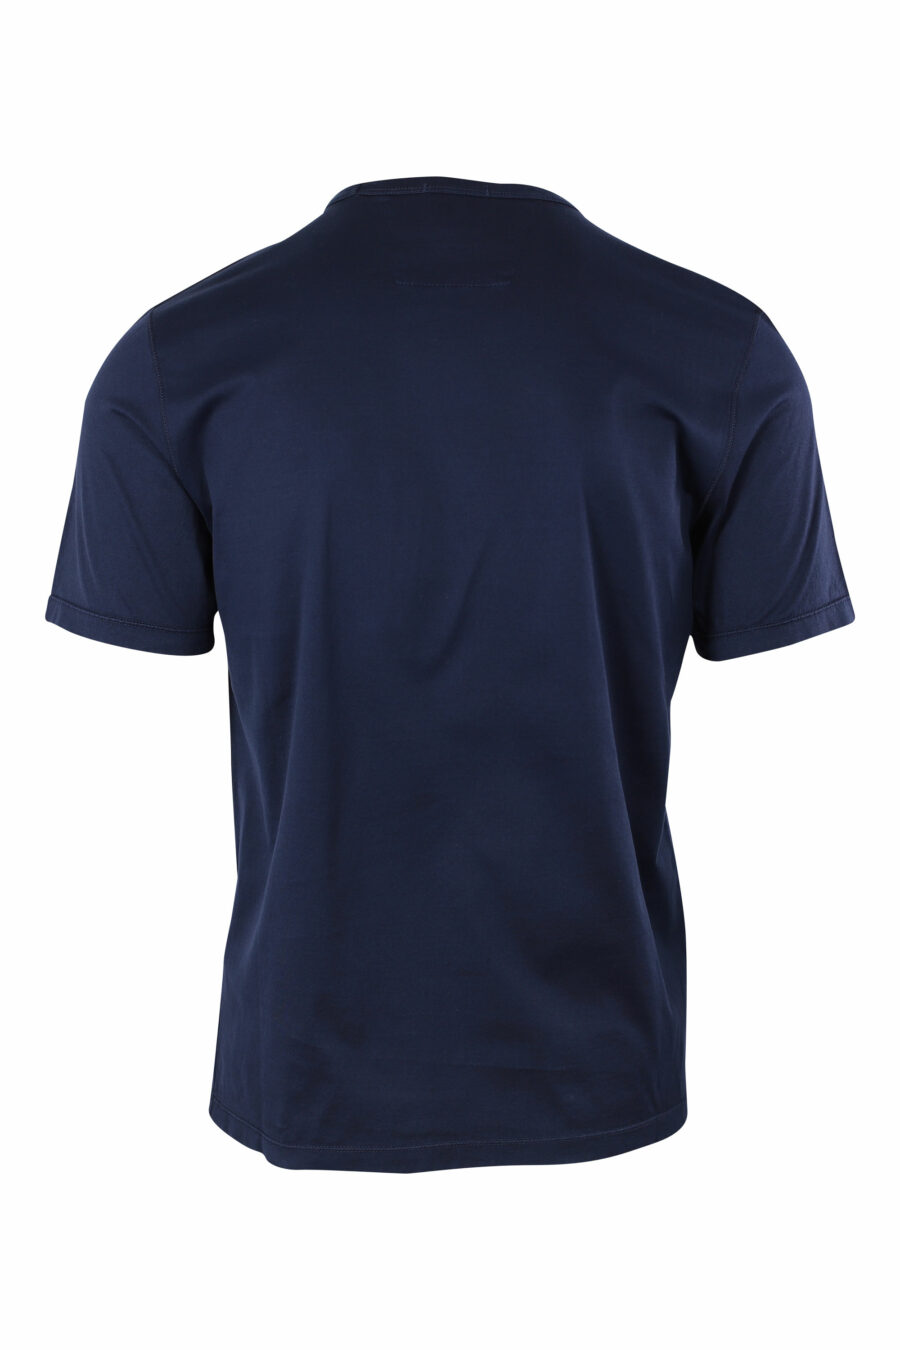 T-shirt bleu foncé avec mini patch logo - IMG 9650